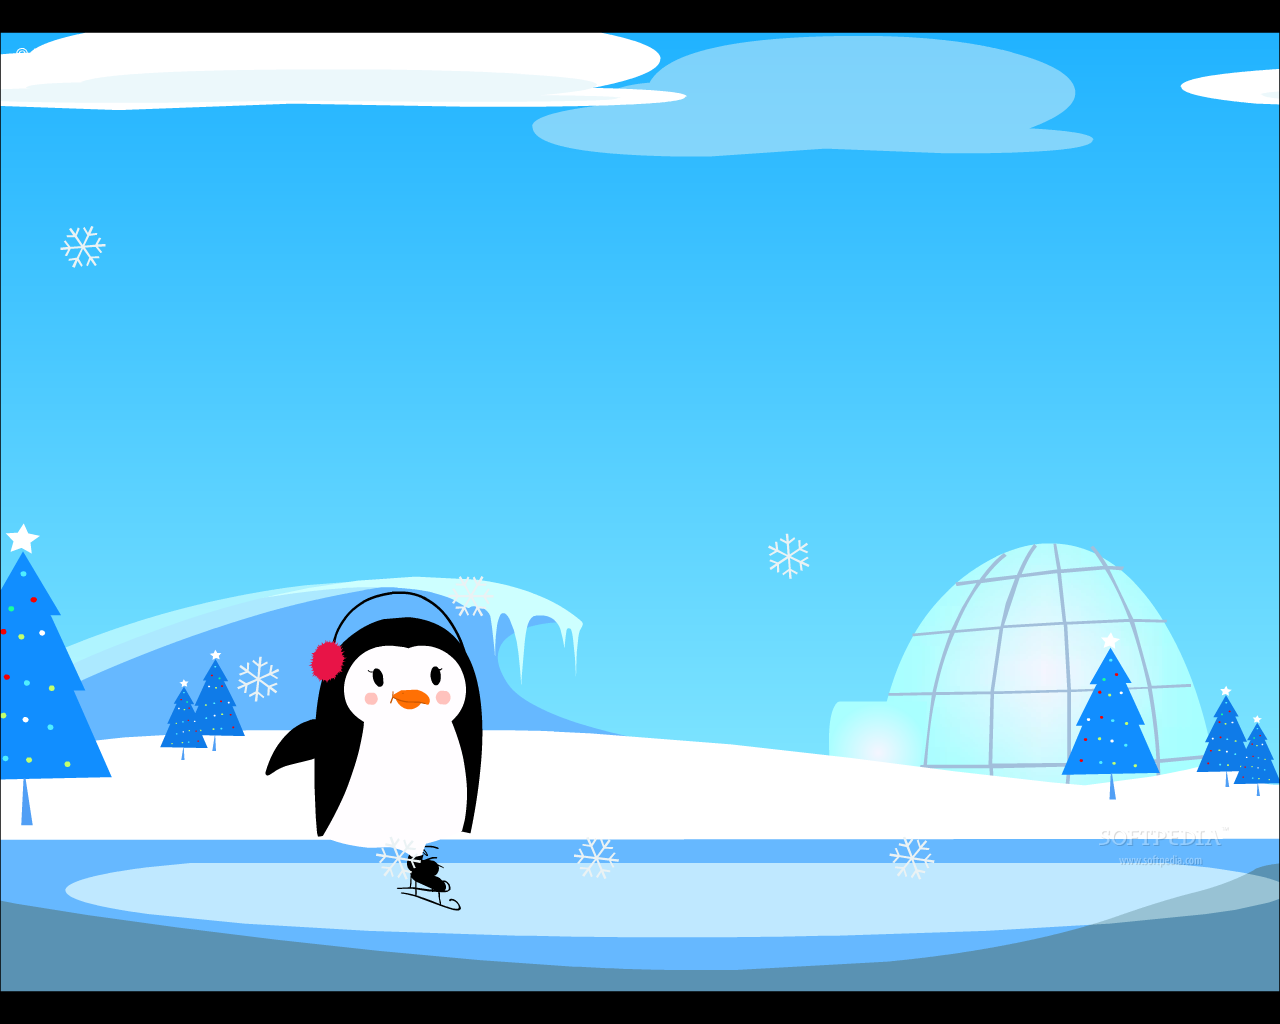 Ice-skating Penguin